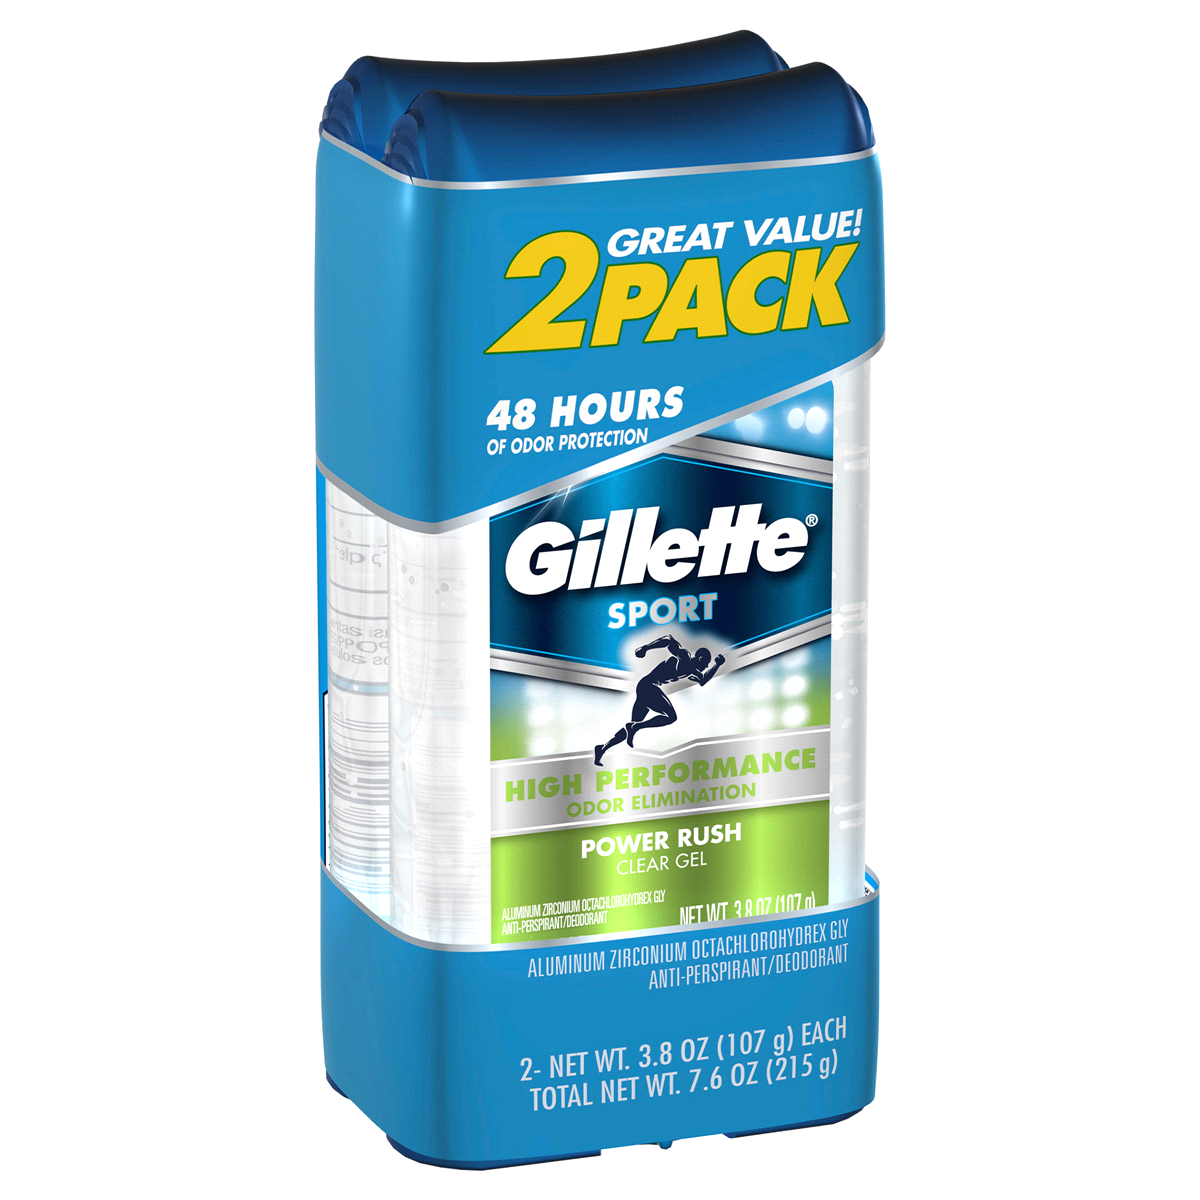 slide 2 of 7, Gillette Antiperspirant Deodorant for Men, Clear Gel, Power Rush, 72 Hr. Sweat Protection, Twin Pack, 3.8 oz each, 2 ct; 3.8 oz